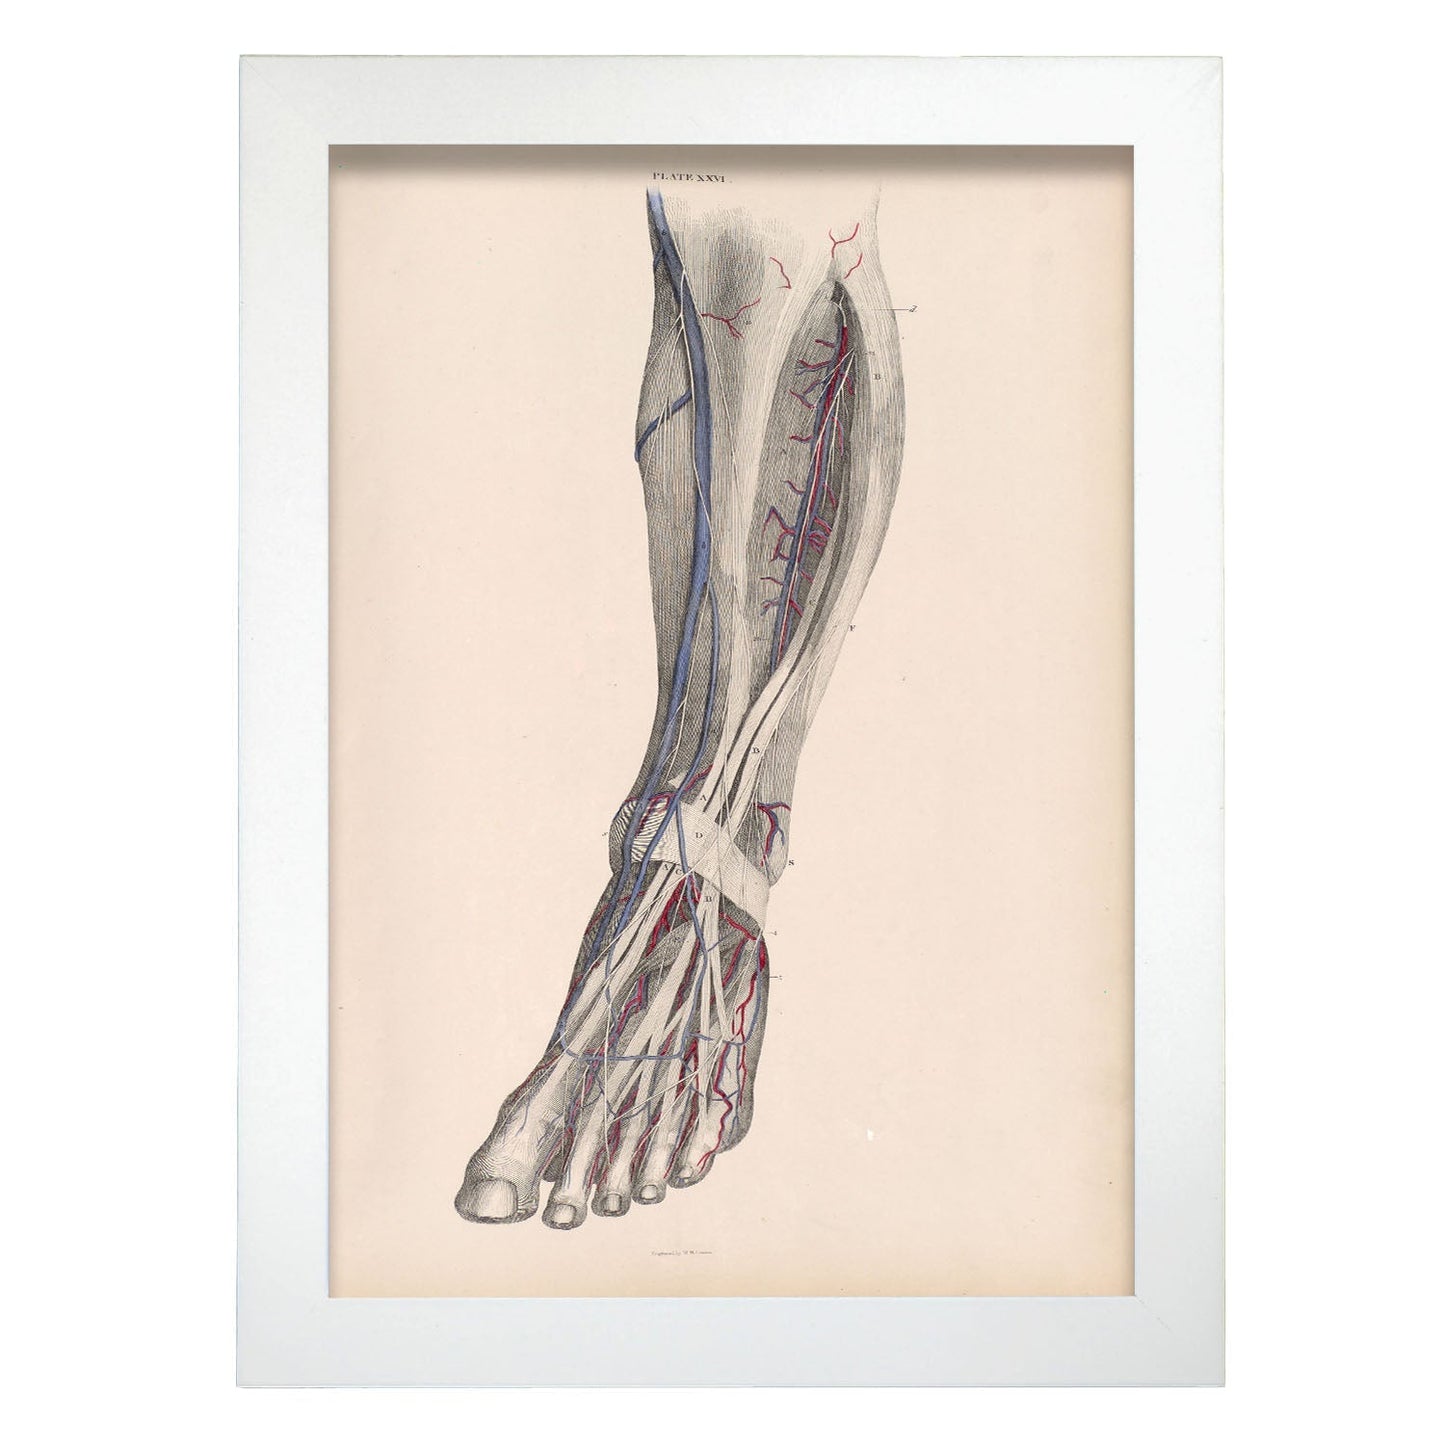 Dissection of the lower leg-Artwork-Nacnic-A4-Marco Blanco-Nacnic Estudio SL